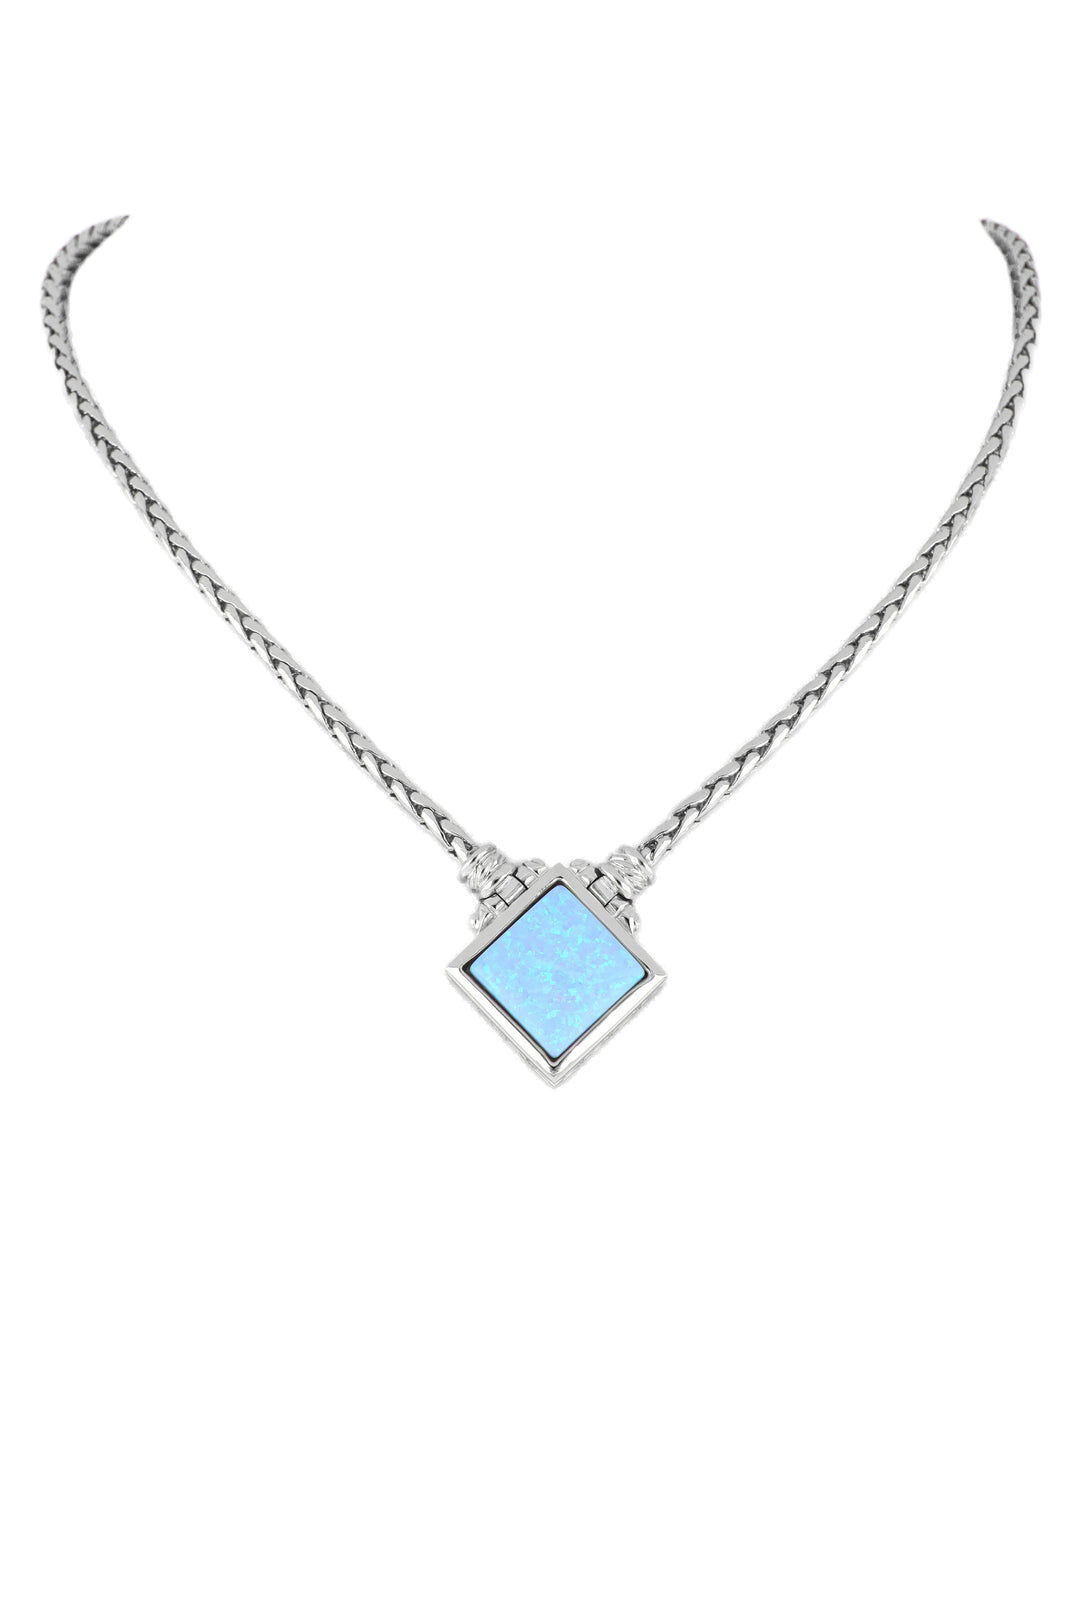 Opalas Do Mar Adjustable Large Diamond-Shaped Stone Necklace